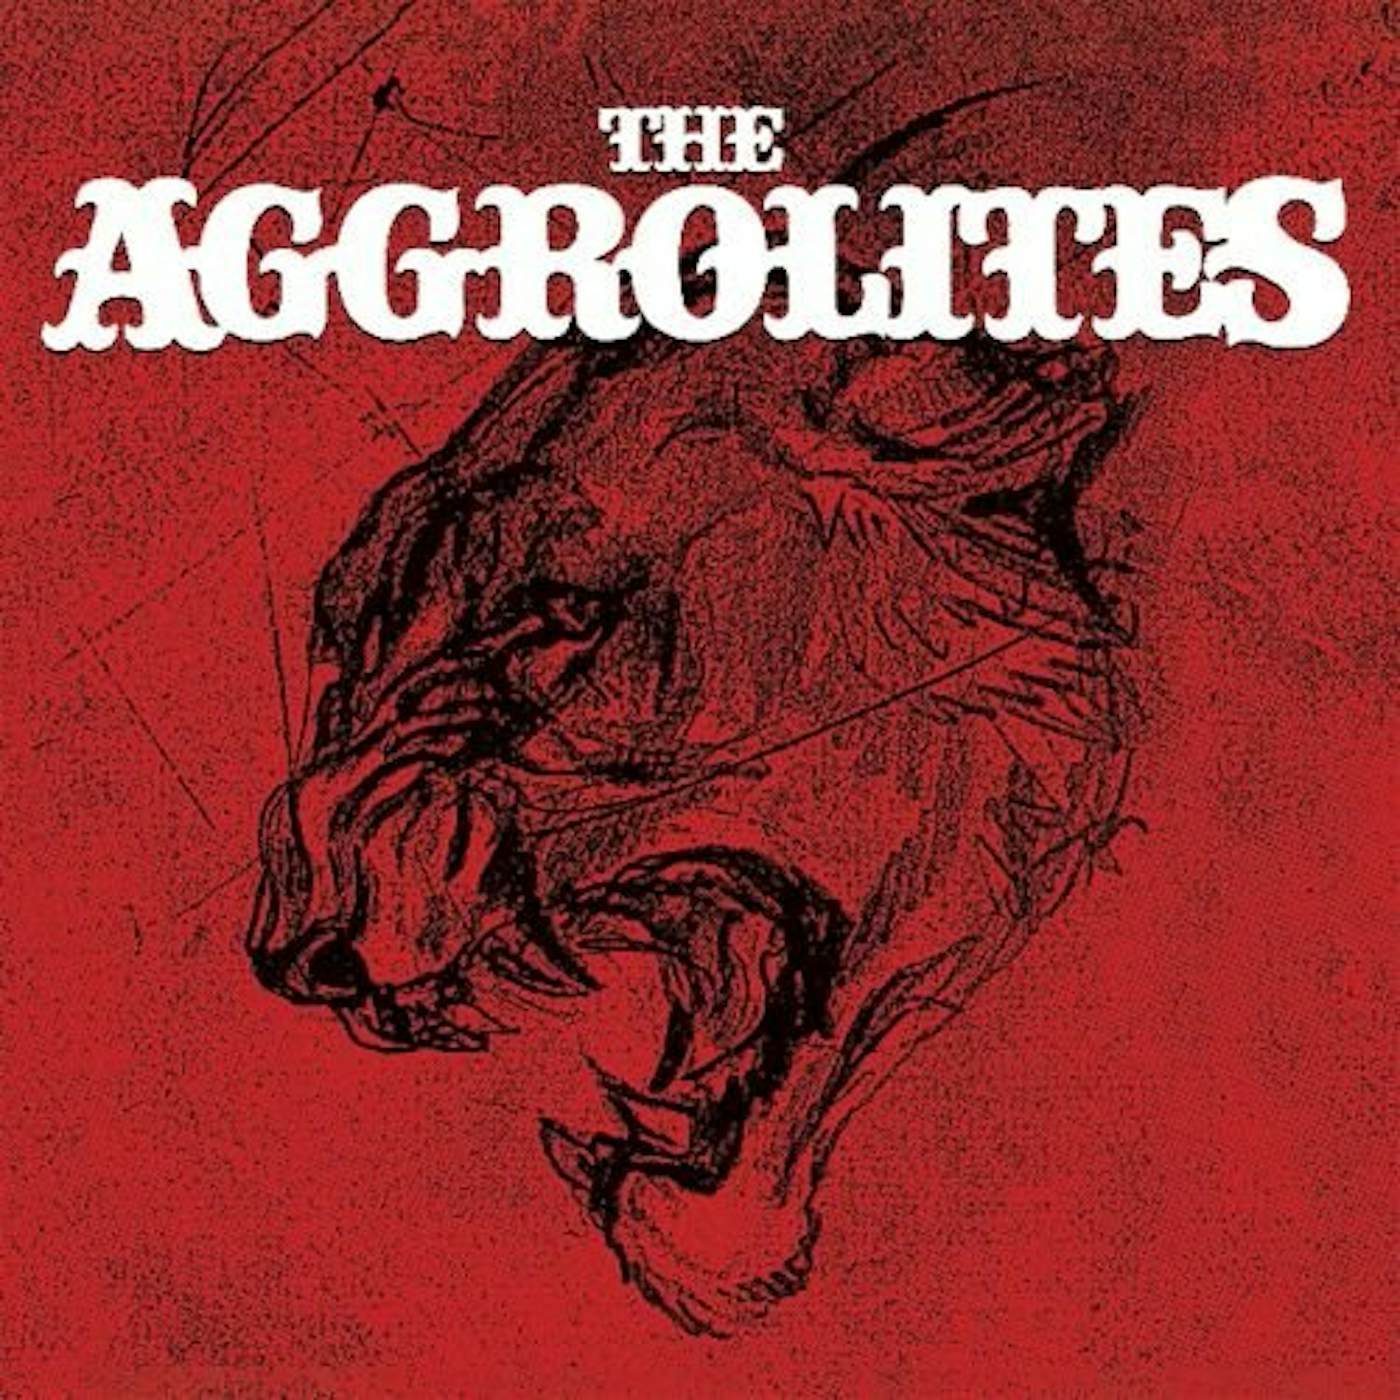 The Aggrolites Vinyl Record